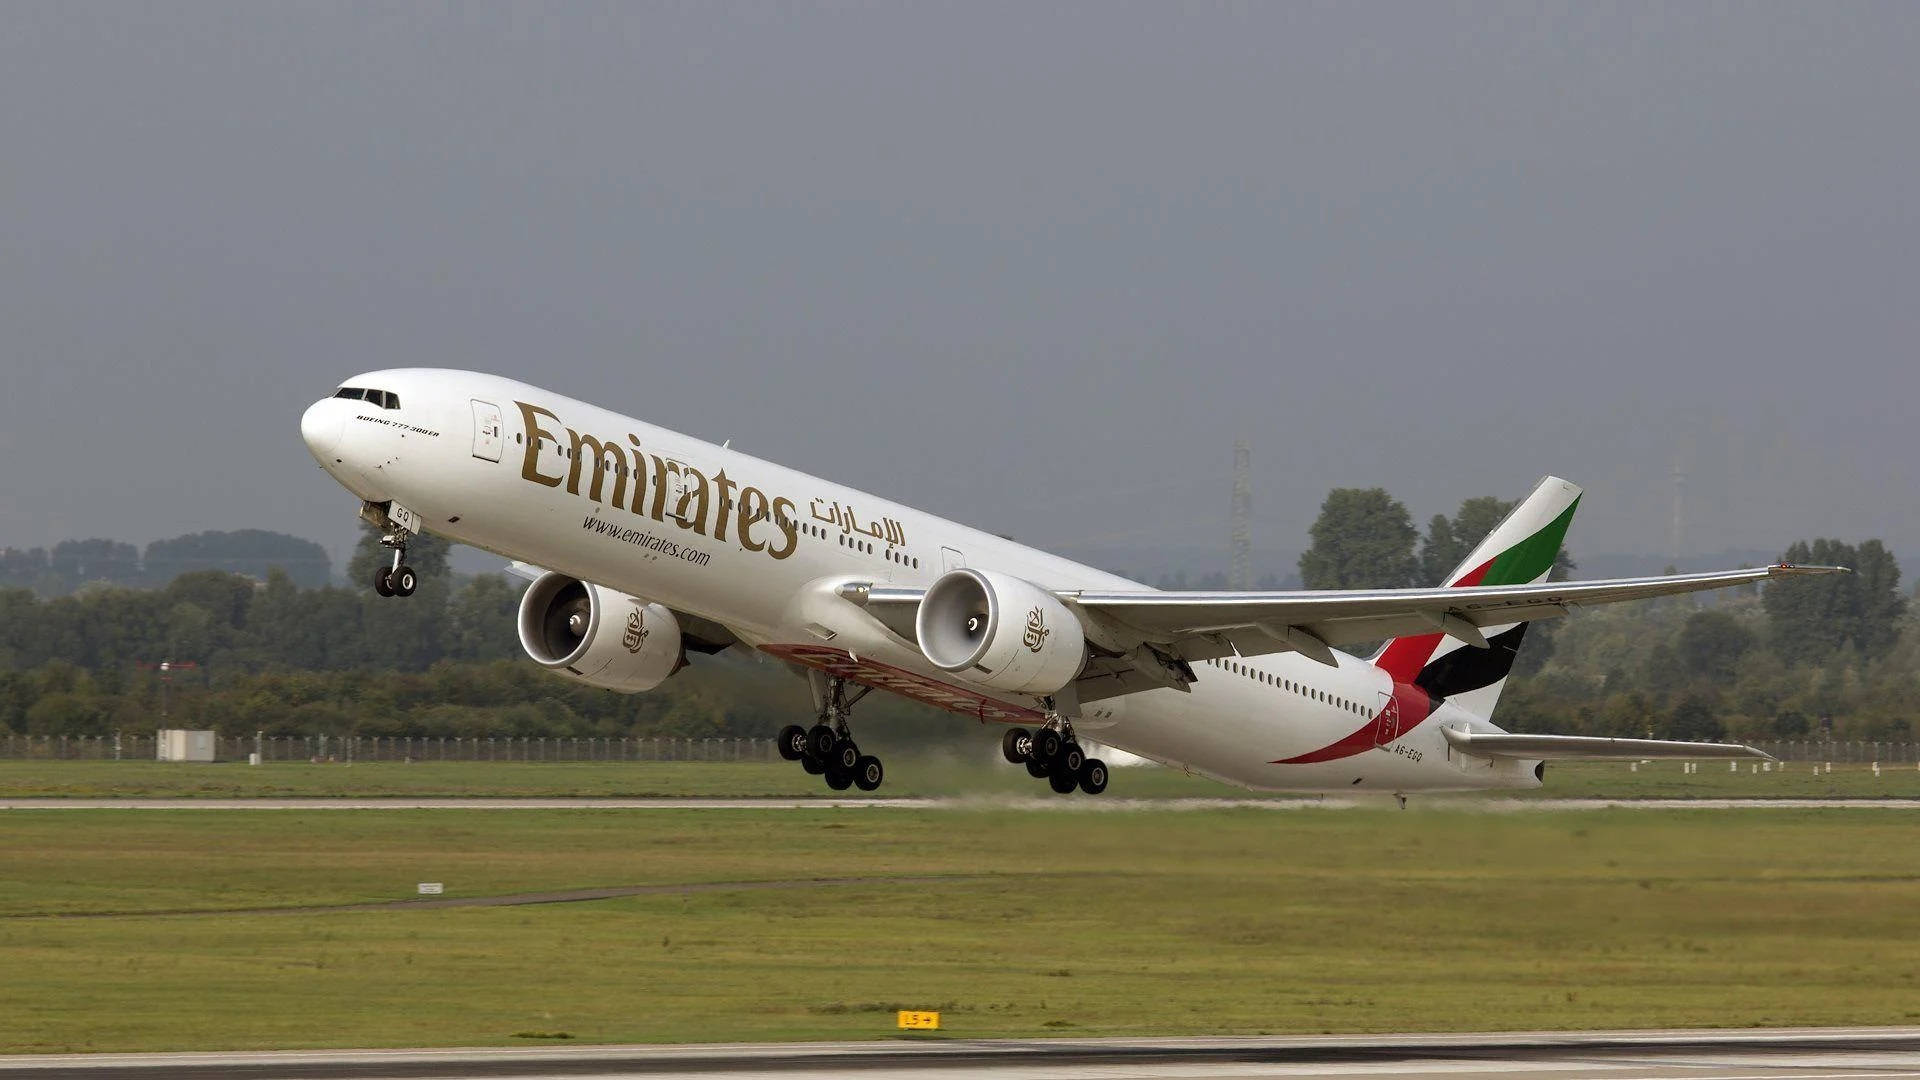 Emiratesairbus A380 Vid Düsseldorfs Flygplats. Wallpaper